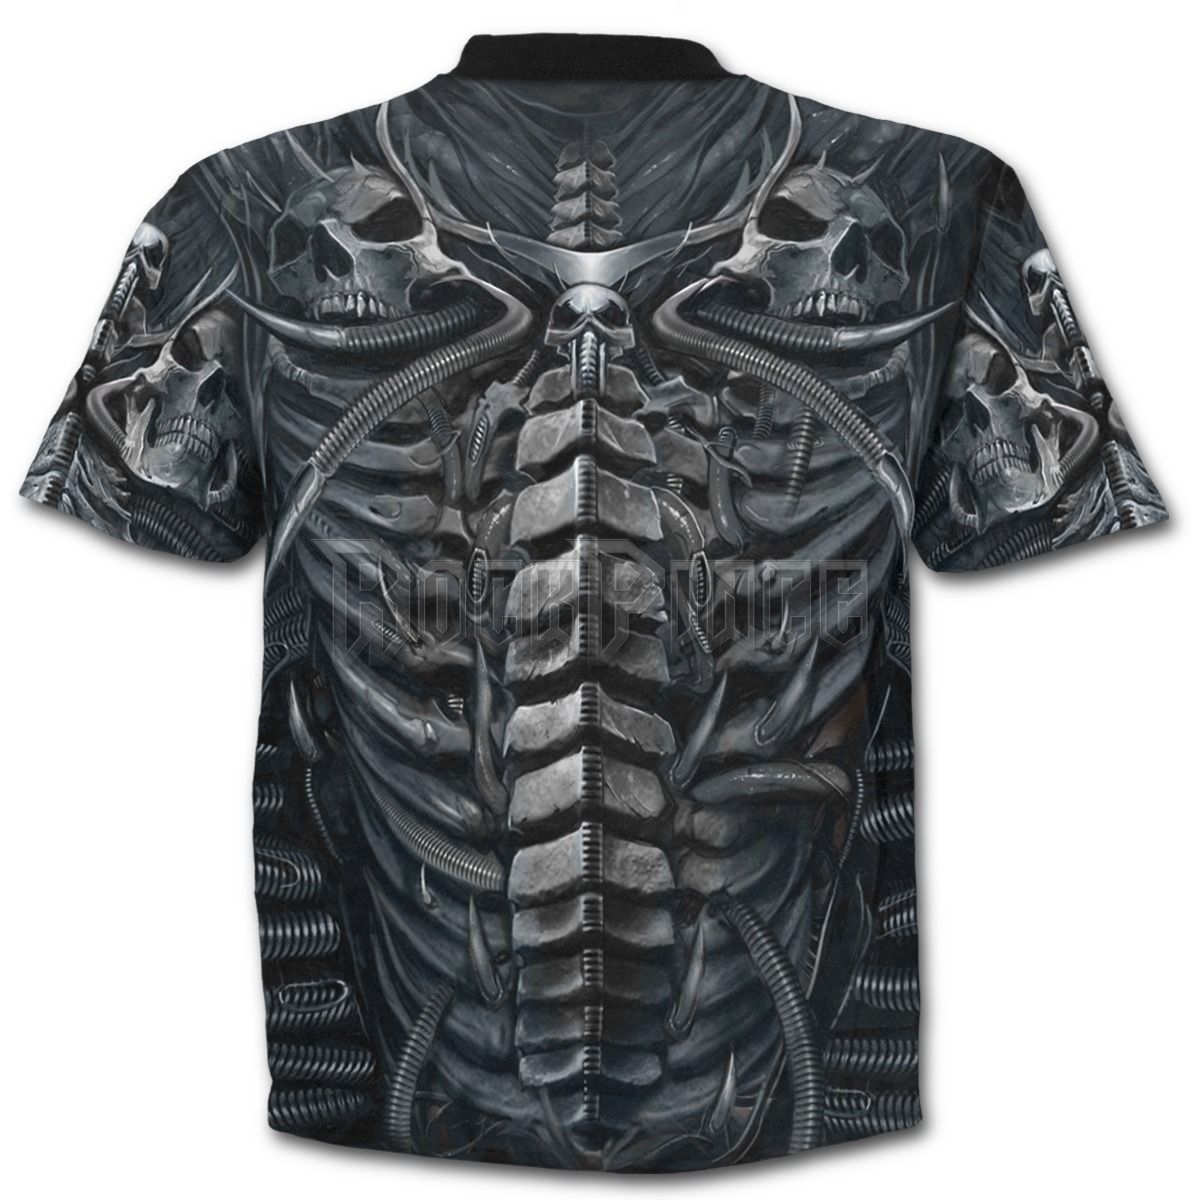 SKULL ARMOUR - Allover T-Shirt Black - W030M105 - UNISEX PÓLÓ